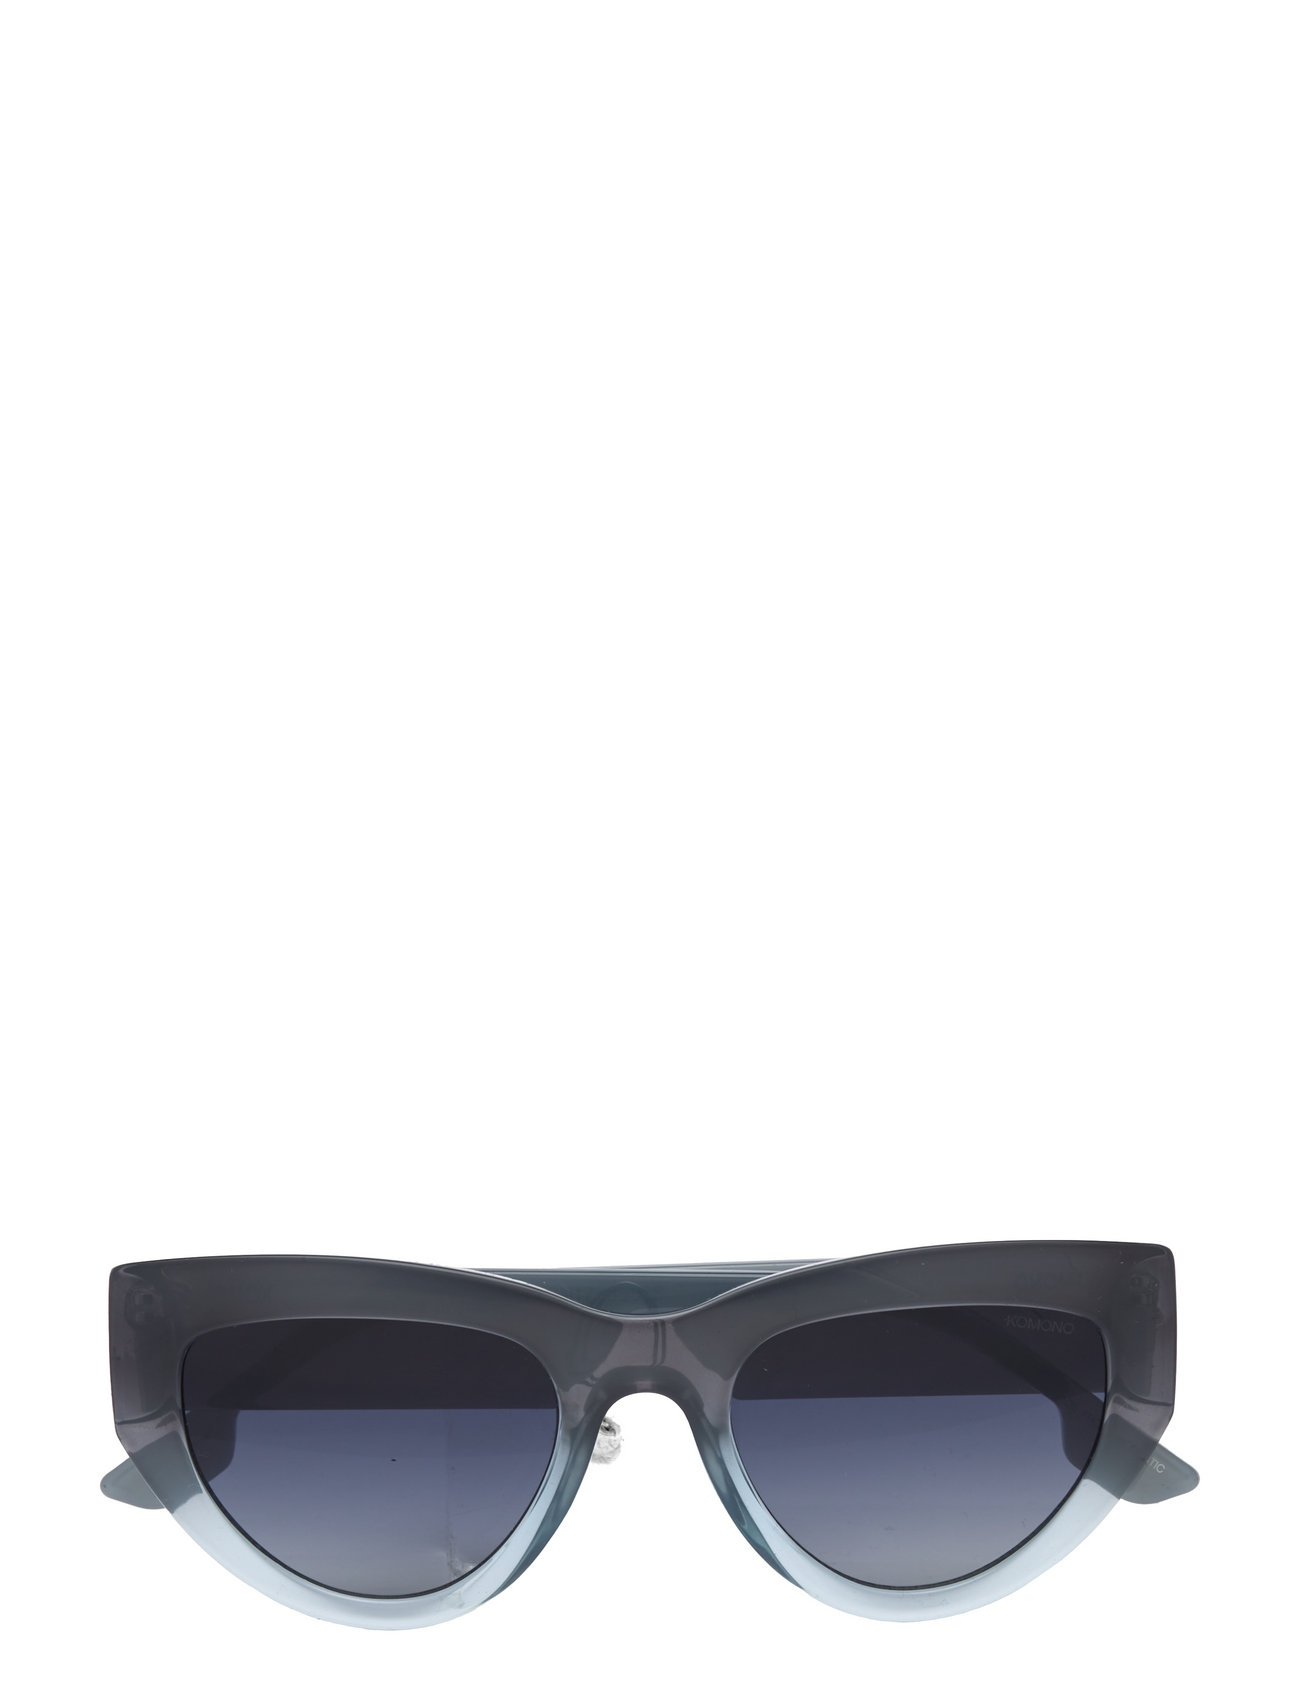 Neo Matrix Accessories Sunglasses D-frame- Wayfarer Sunglasses Blue Komono